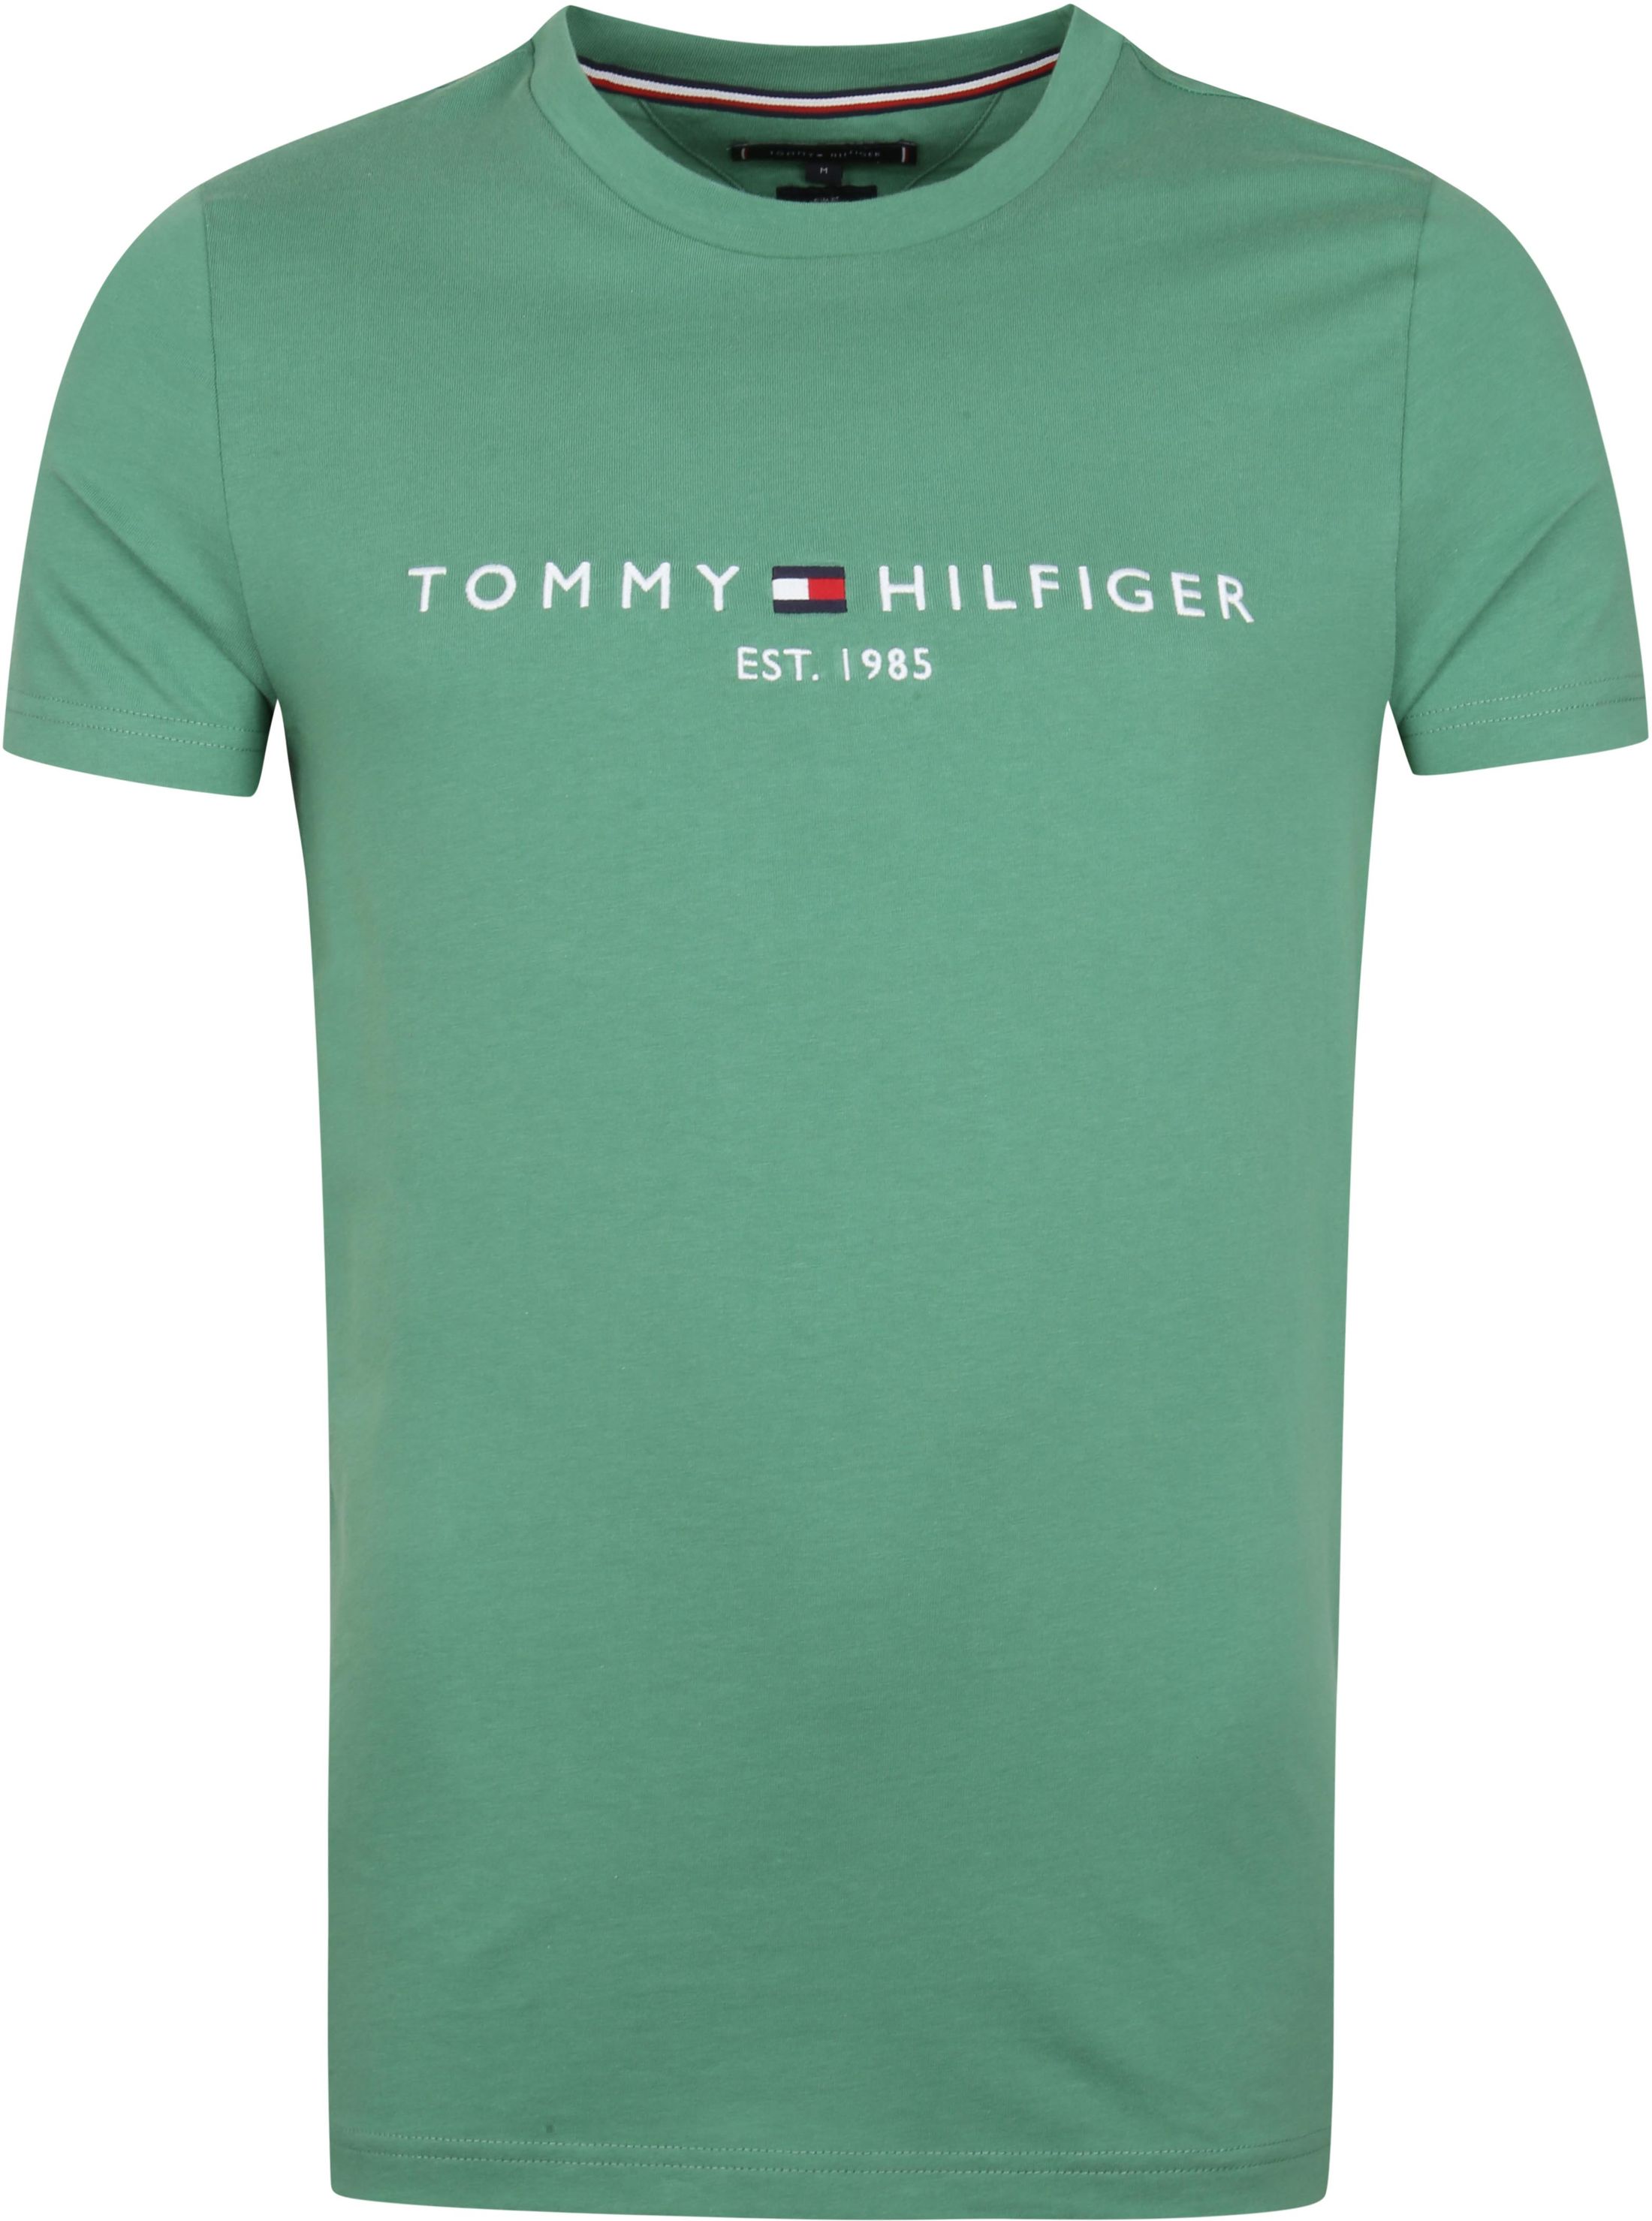 Tommy Hilfiger T Shirt Logo Green size L